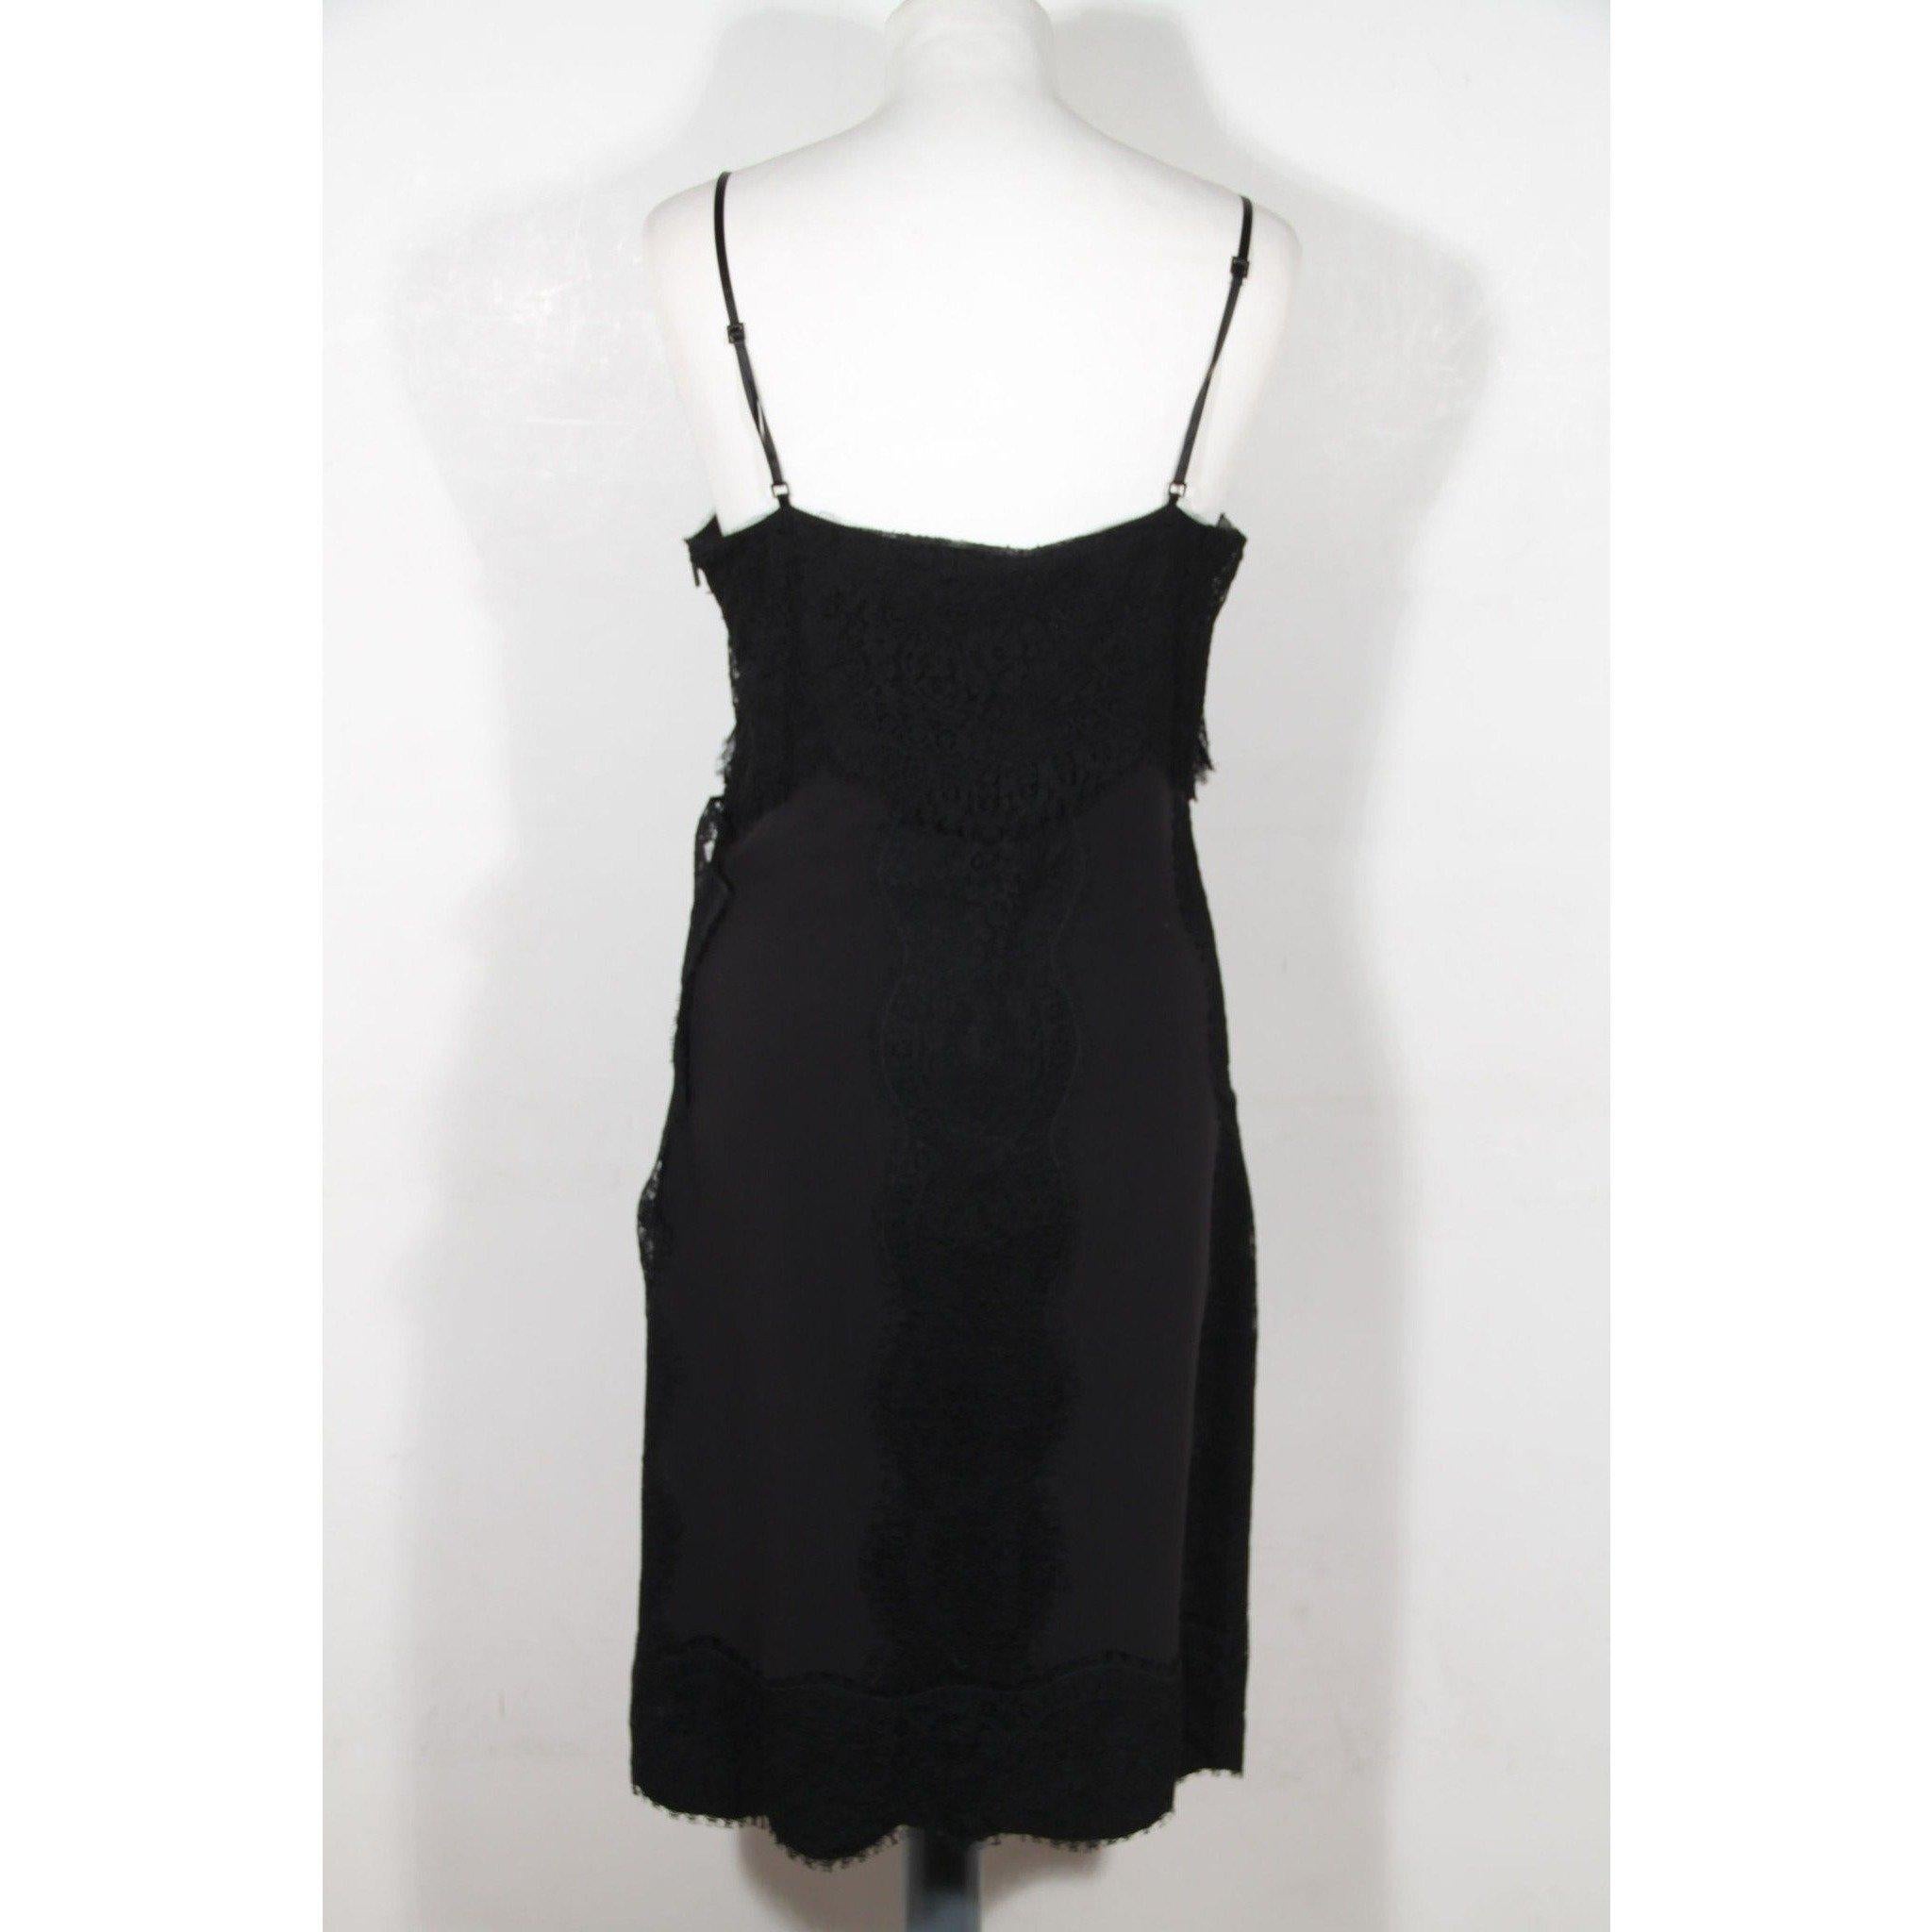 Women's Gucci Black Silk Cami Llttle Black Dress with Lace Trim Size 42 IT